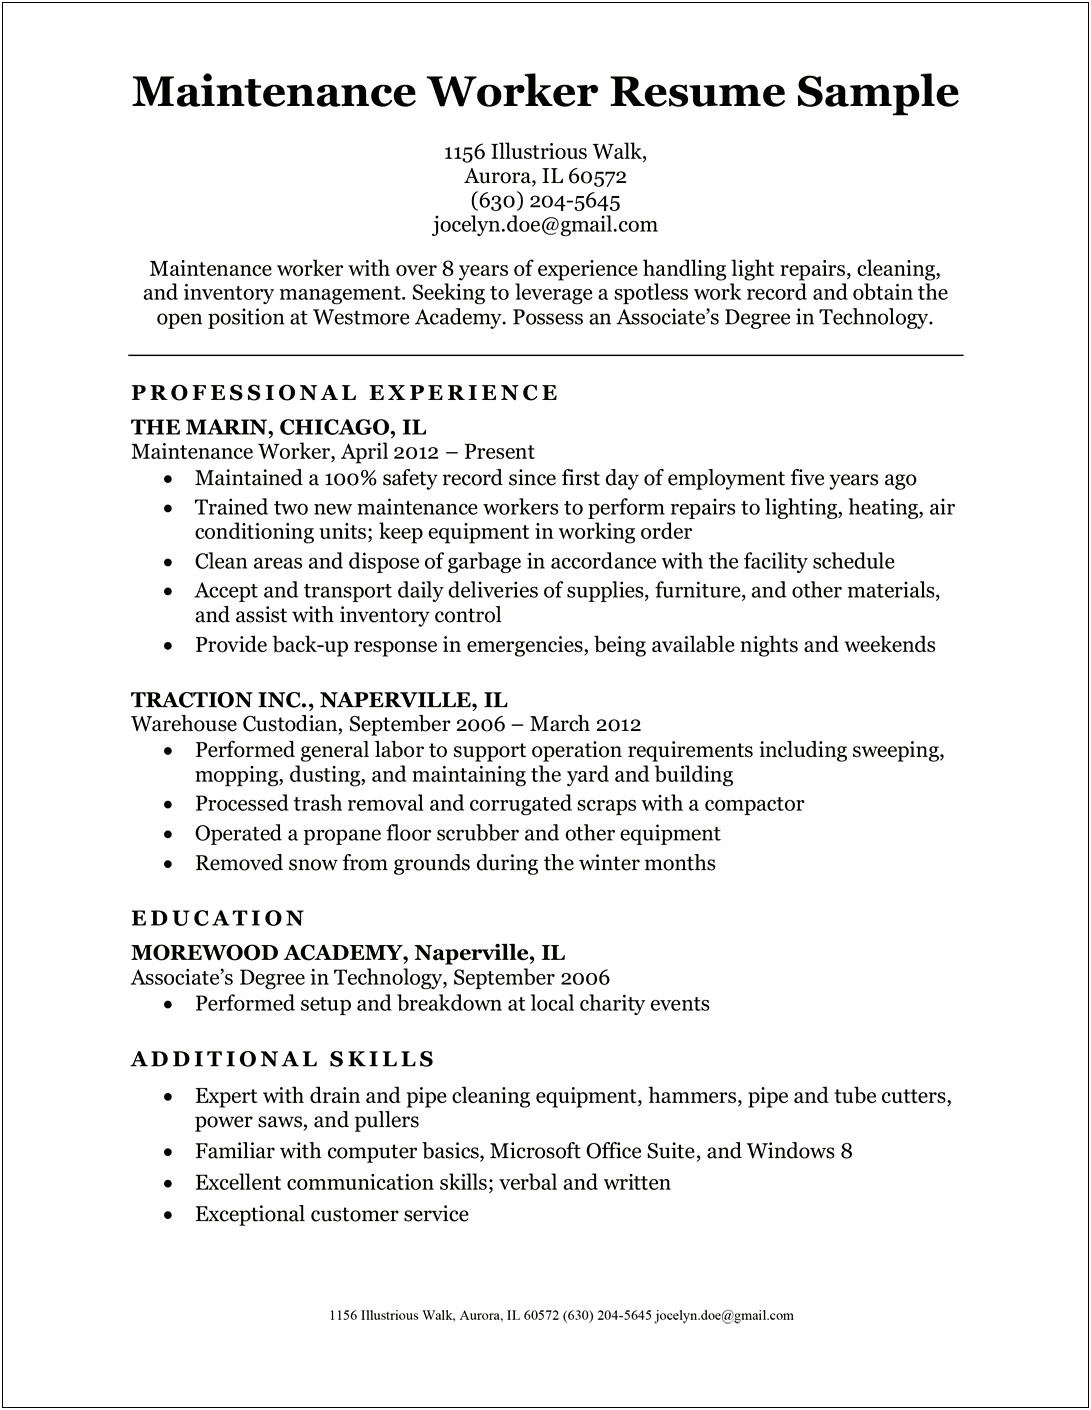 Resume Skills For Maintenance Technician